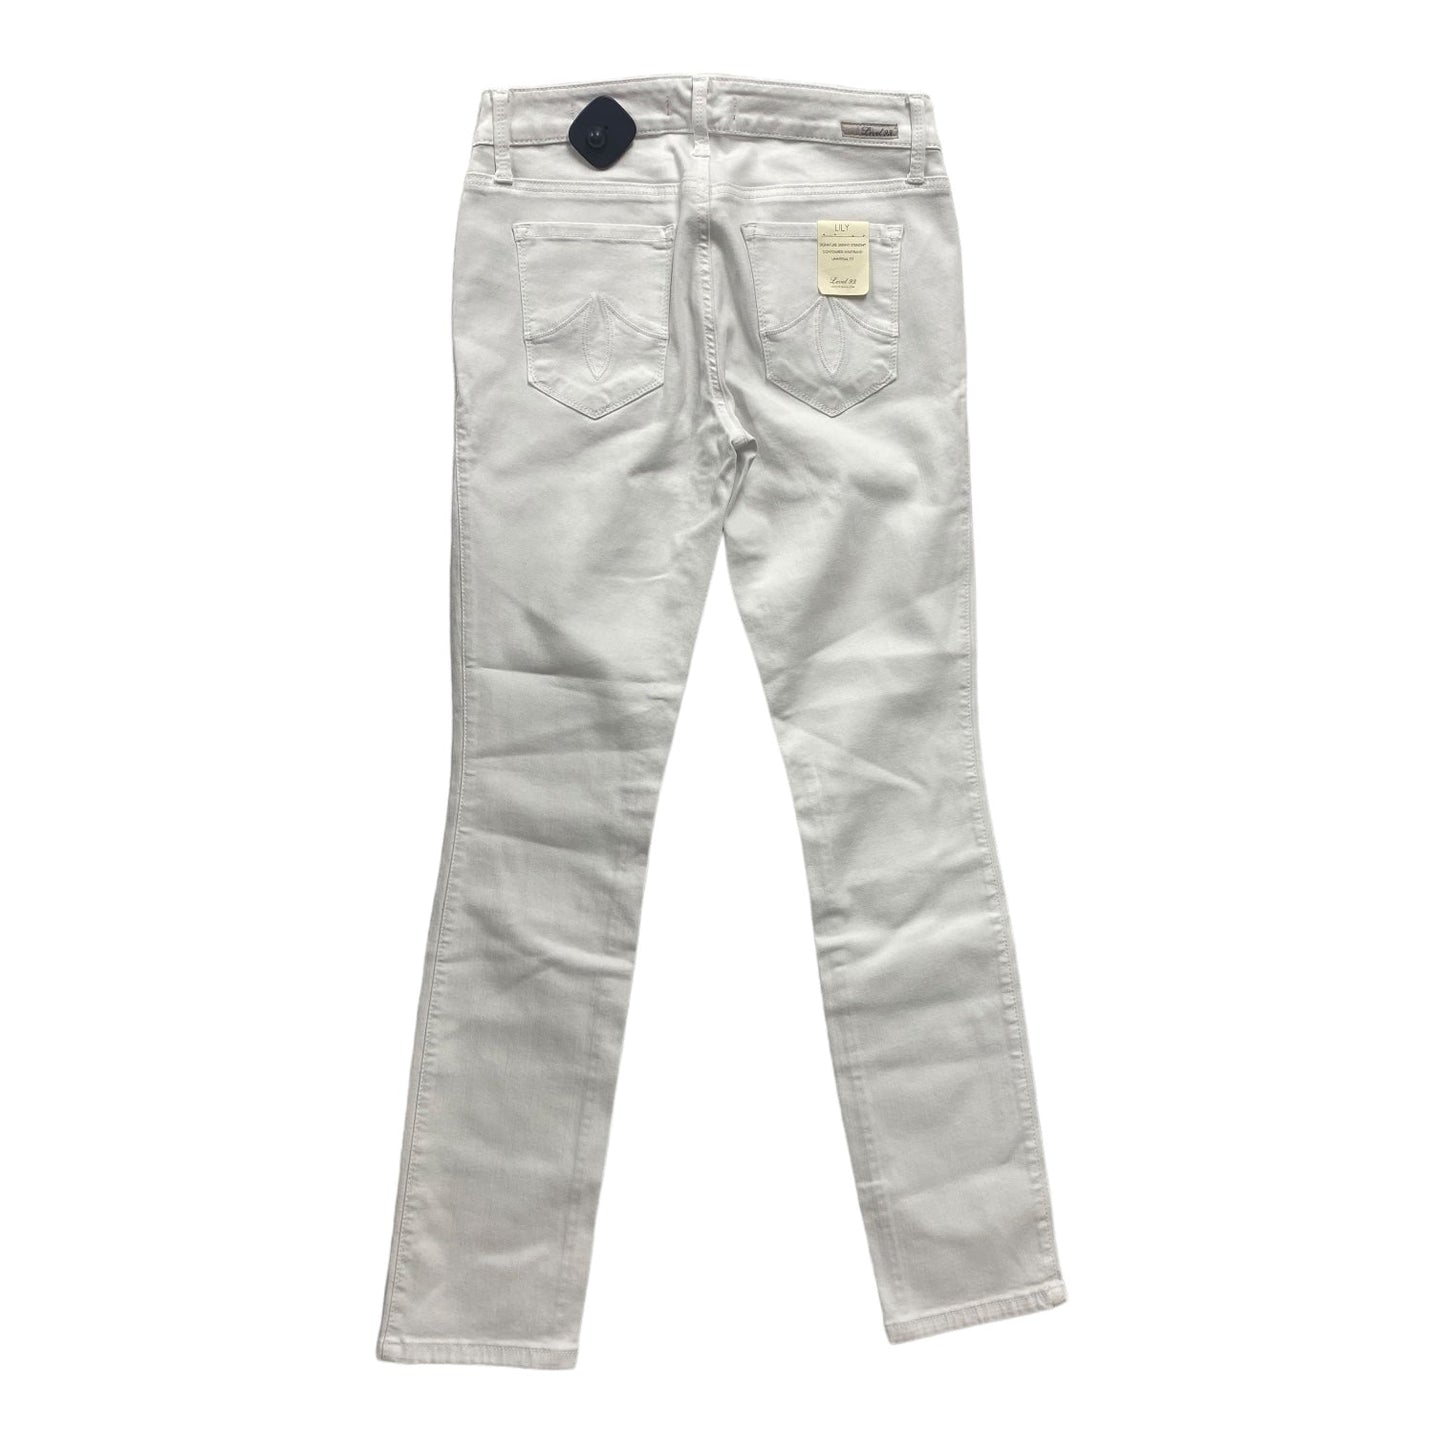 White Jeans Skinny Level 99, Size 4